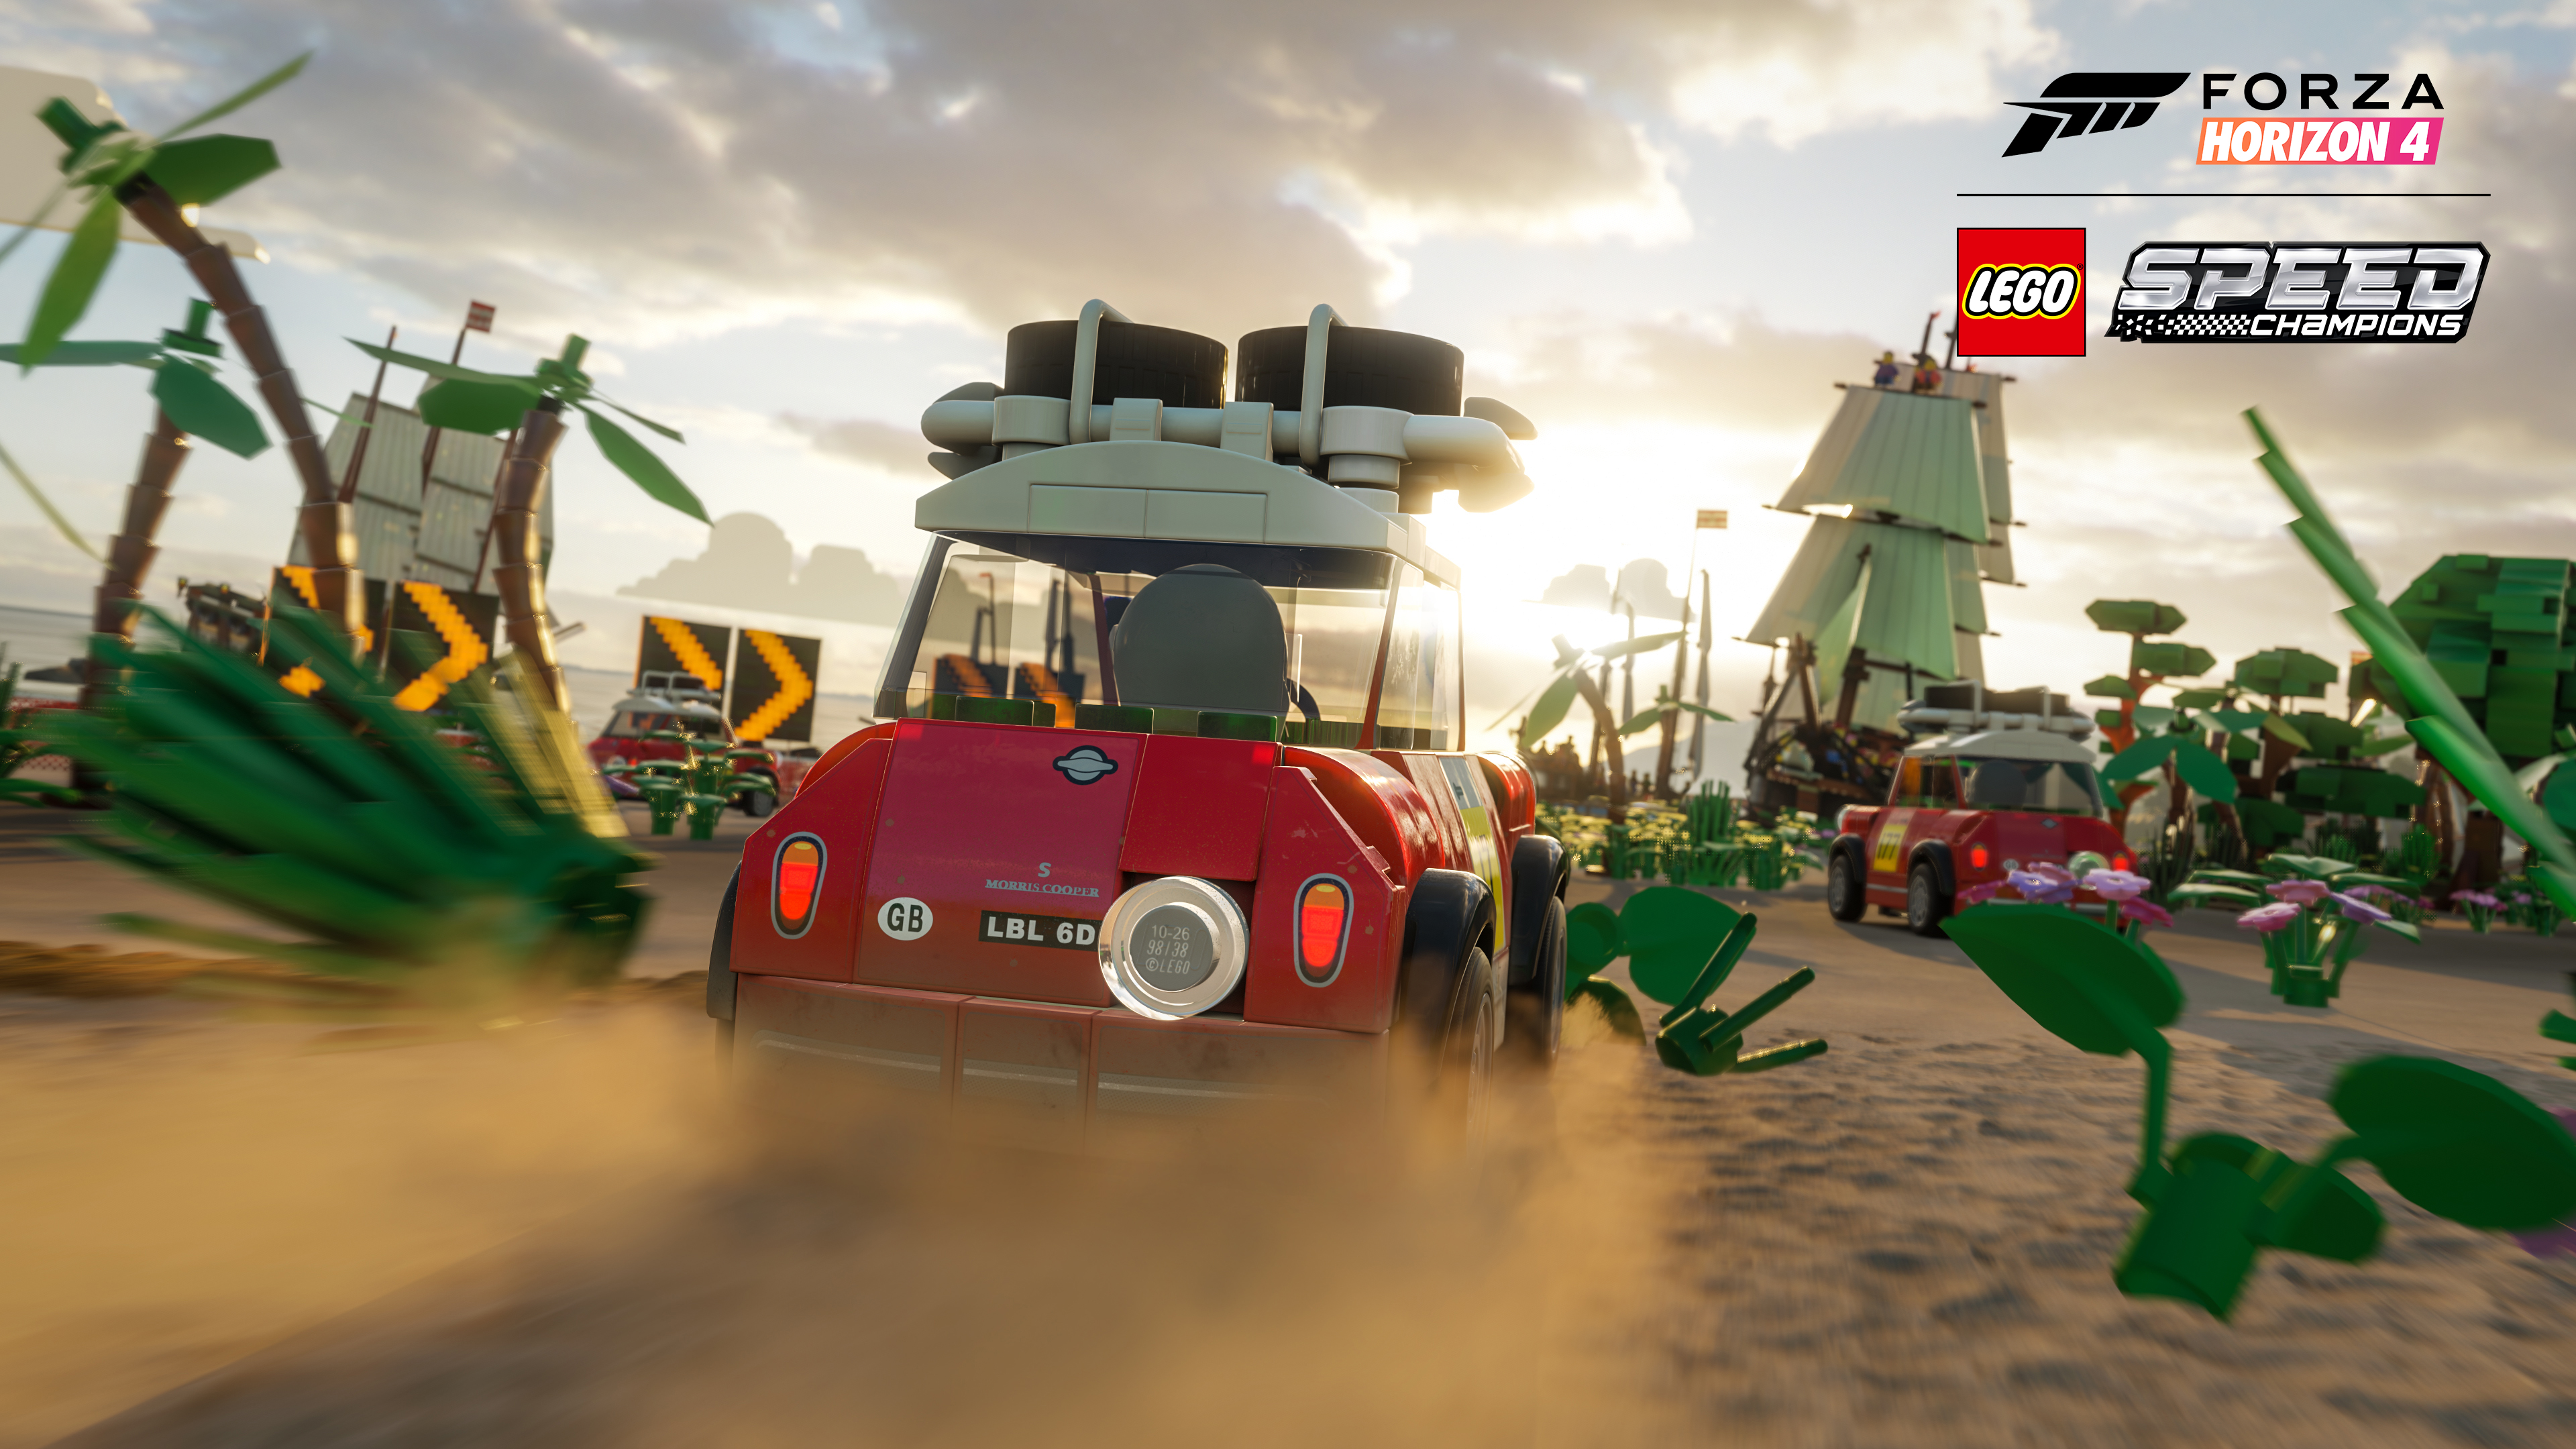 General 3840x2160 Forza Horizon 4 video games LEGO logo video game art race cars racing